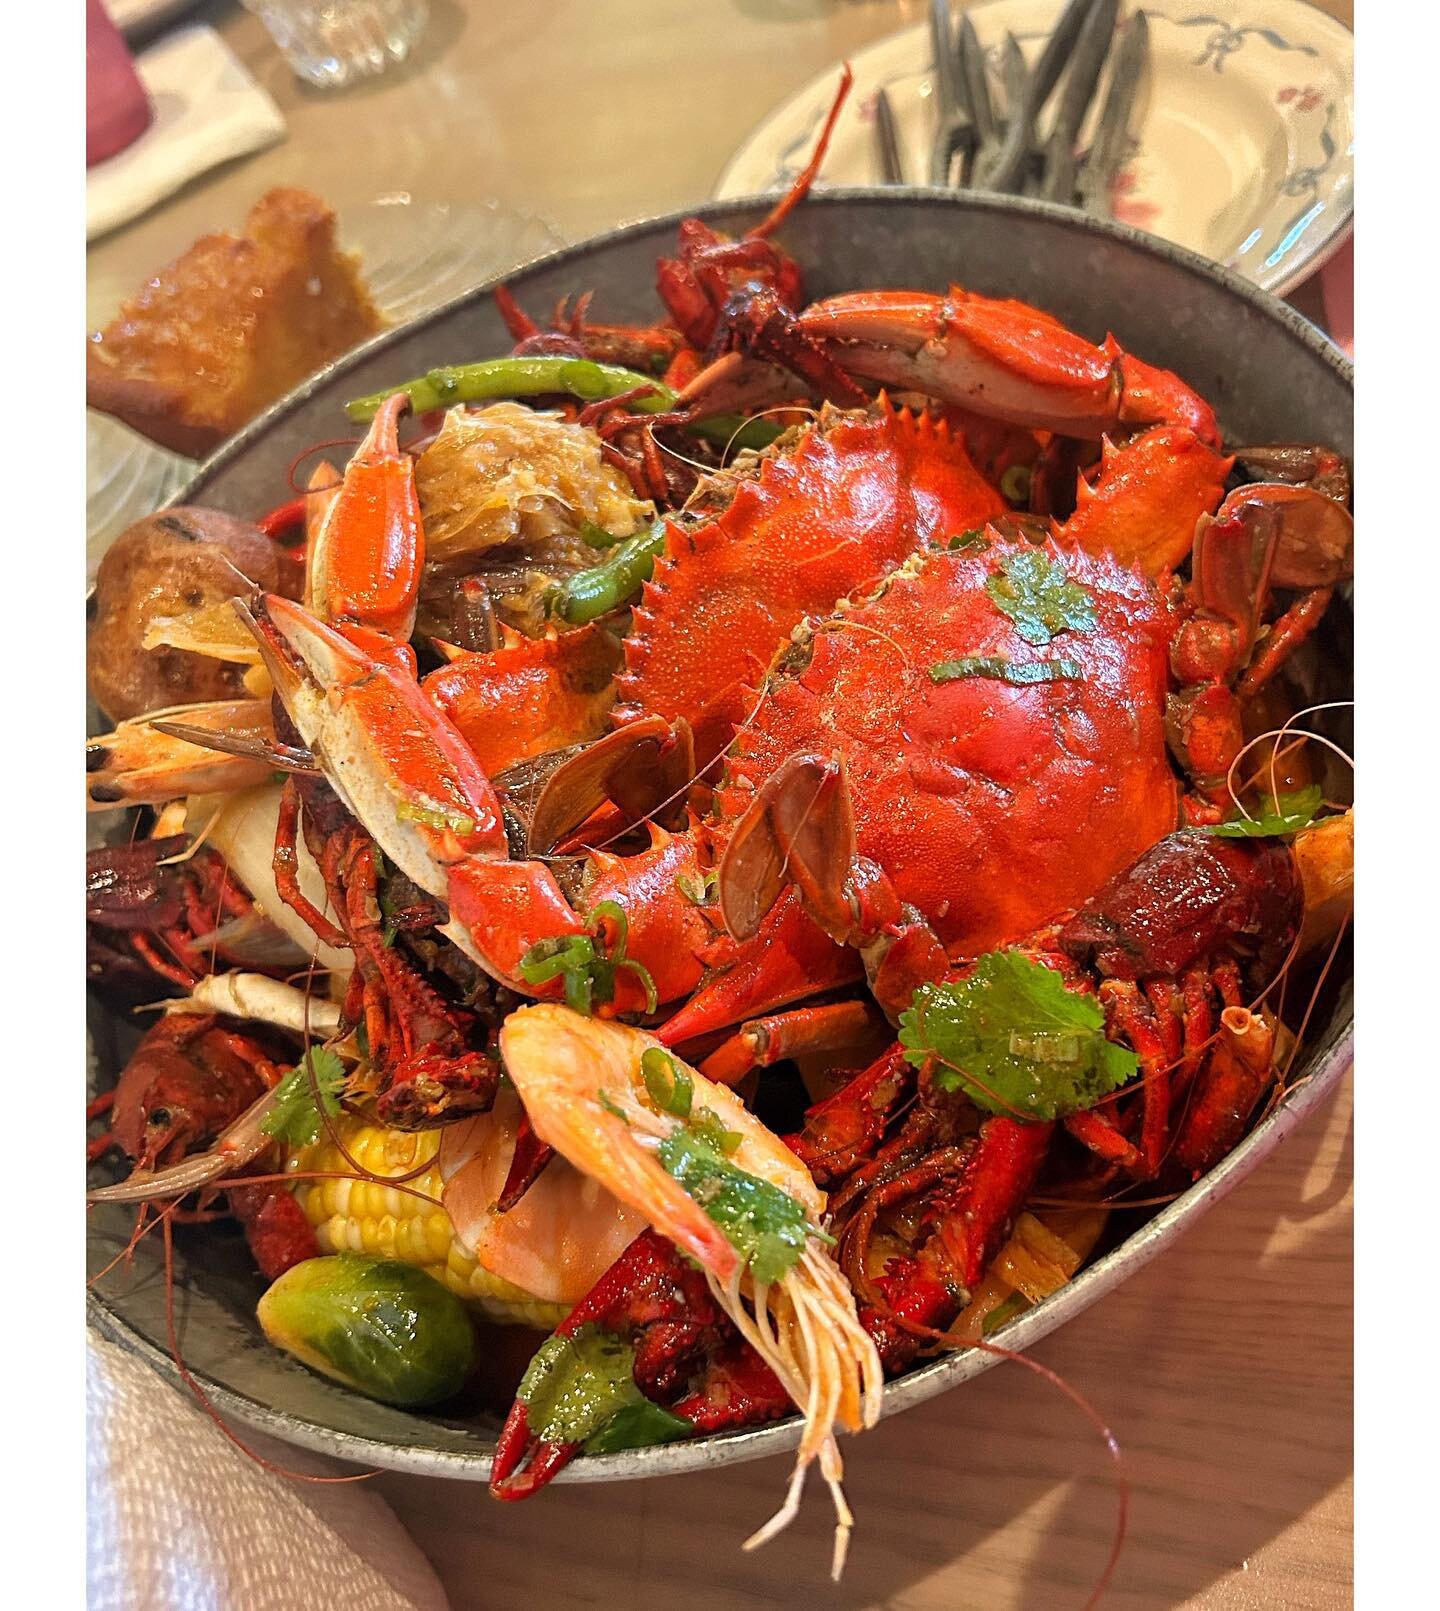 New family favorite 🦐🦀 in town @seafoodsallys 👌#eaternola #neworleansfood .
.
.
.
.
#eatstagram #neworleansculture #louisianafood #louisiana #neworleans #seafood #seafoodboil #happybaby #familydinner #delish #forkyeah #food52 #f52grams #nola #nola